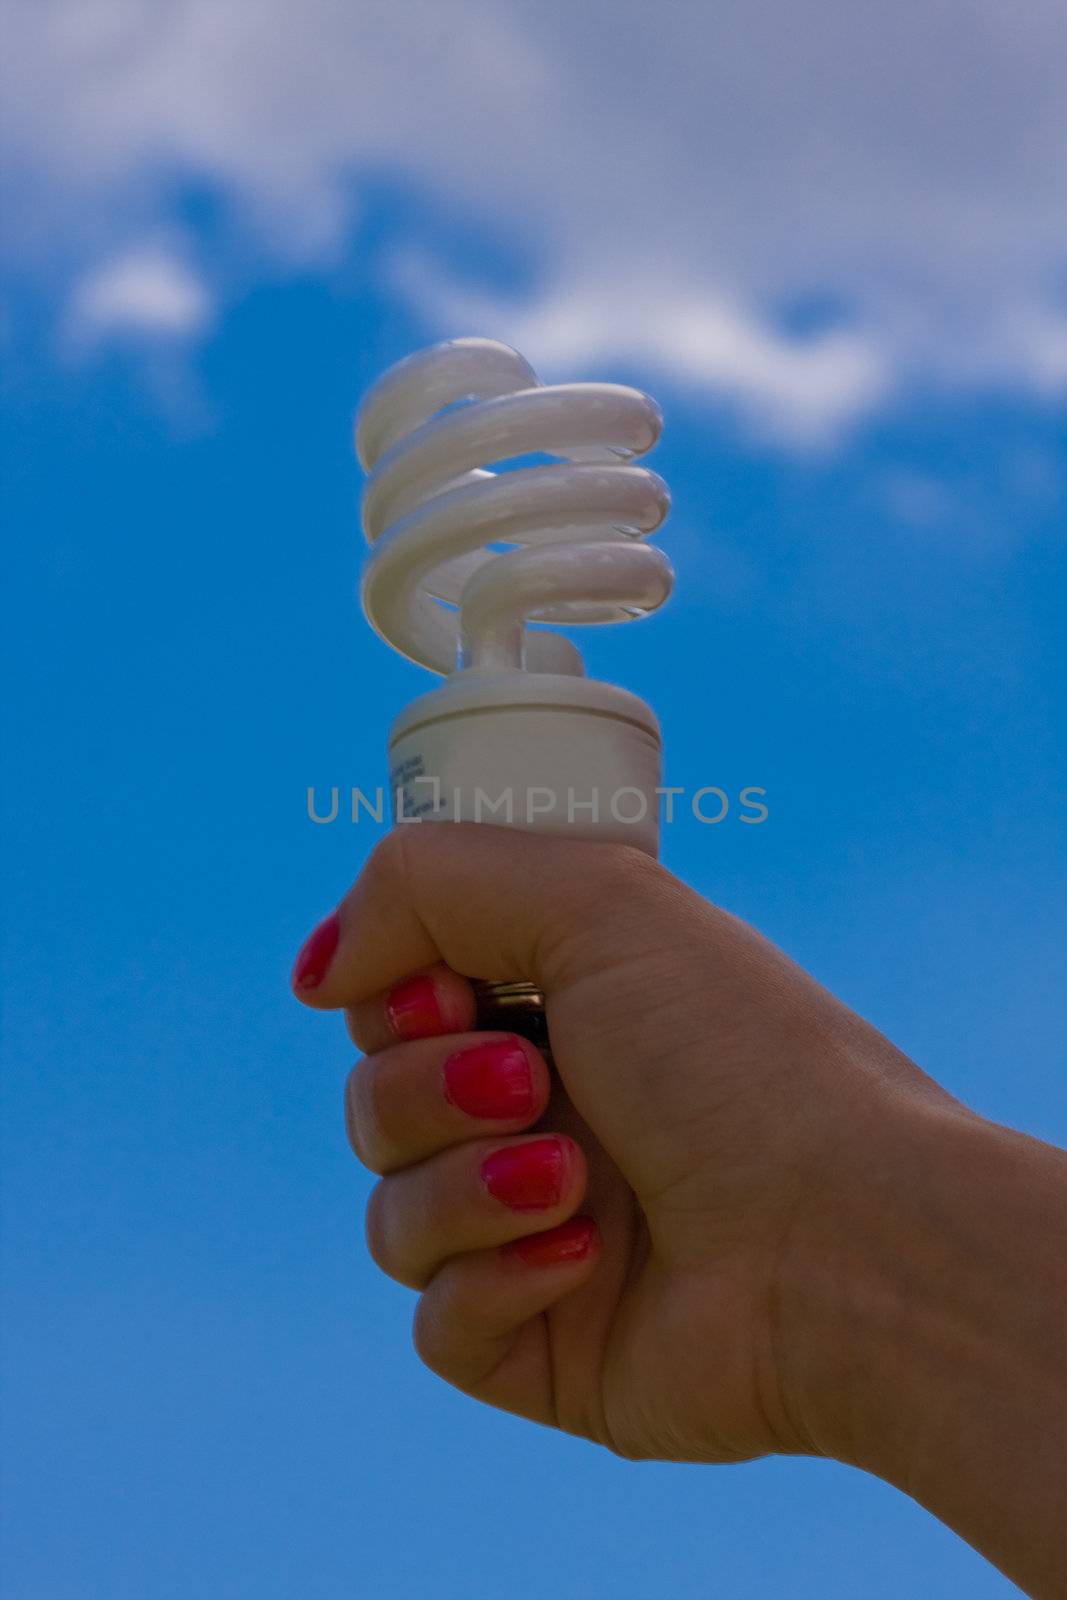 light bulb by snokid